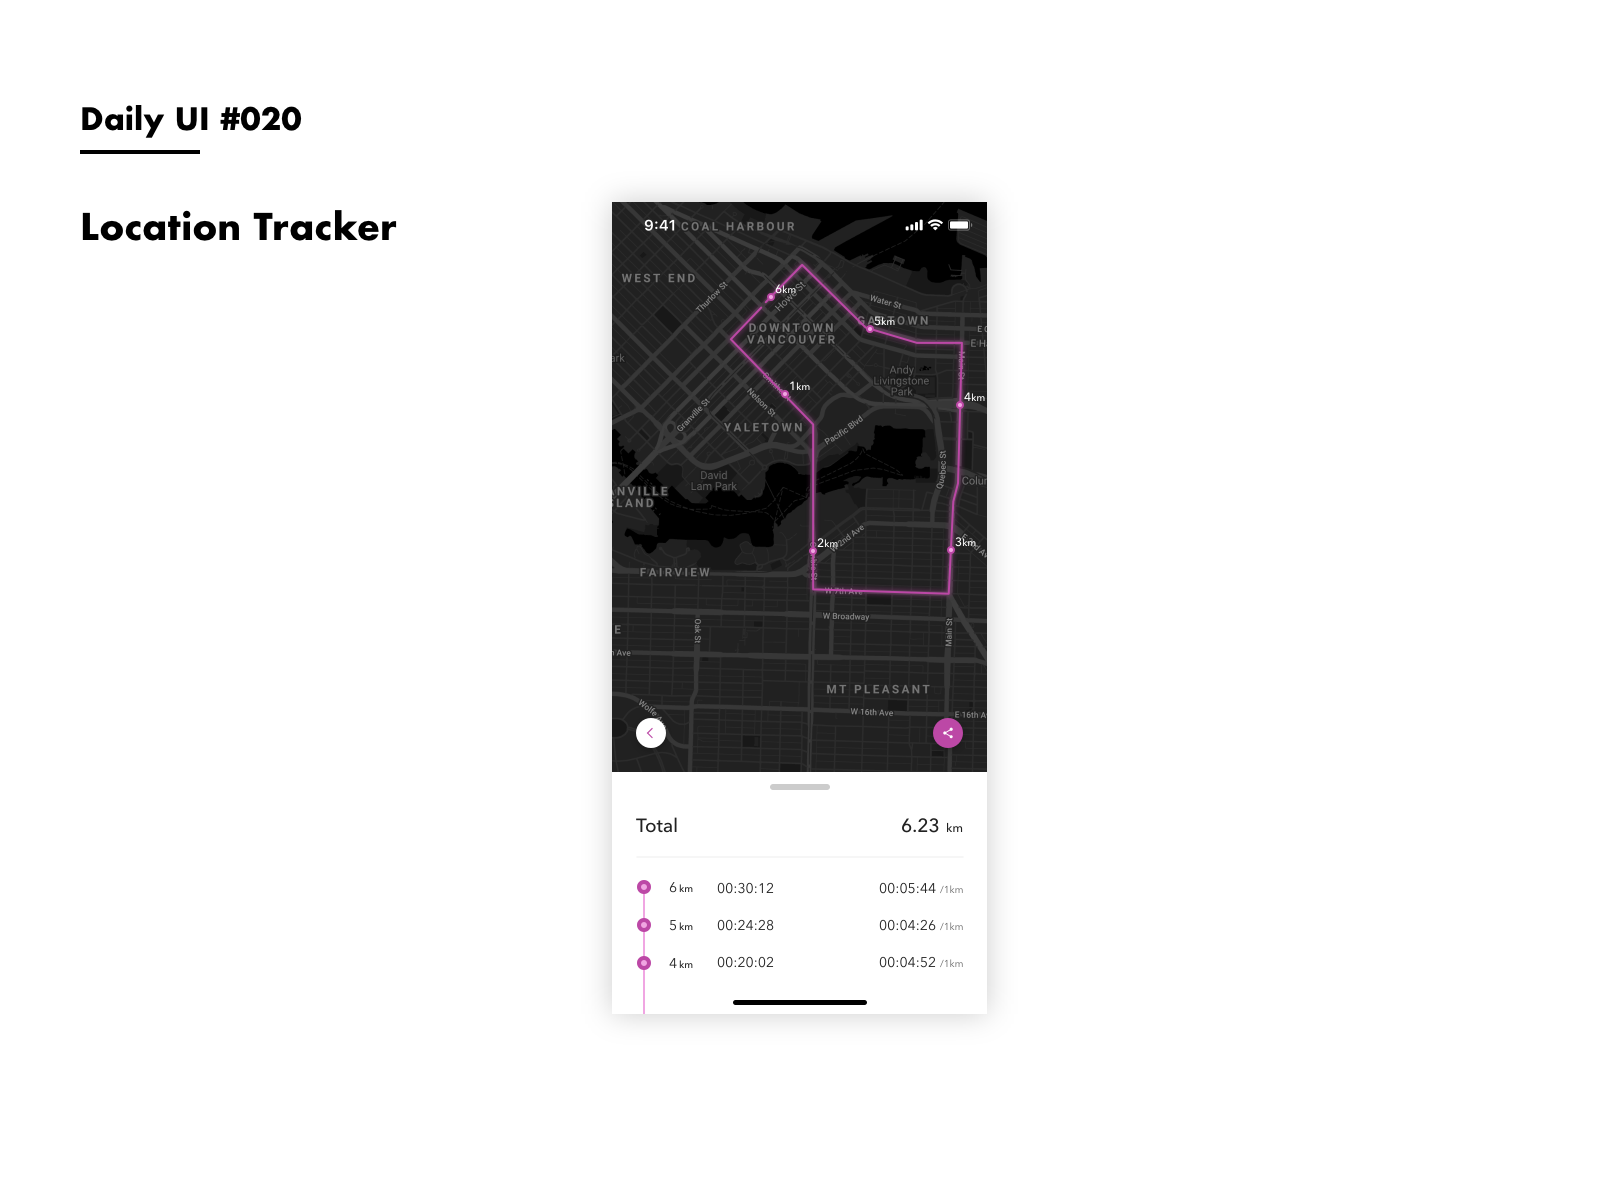 Daily UI 020 Location Tracker by Keisuke Yamashita on Dribbble